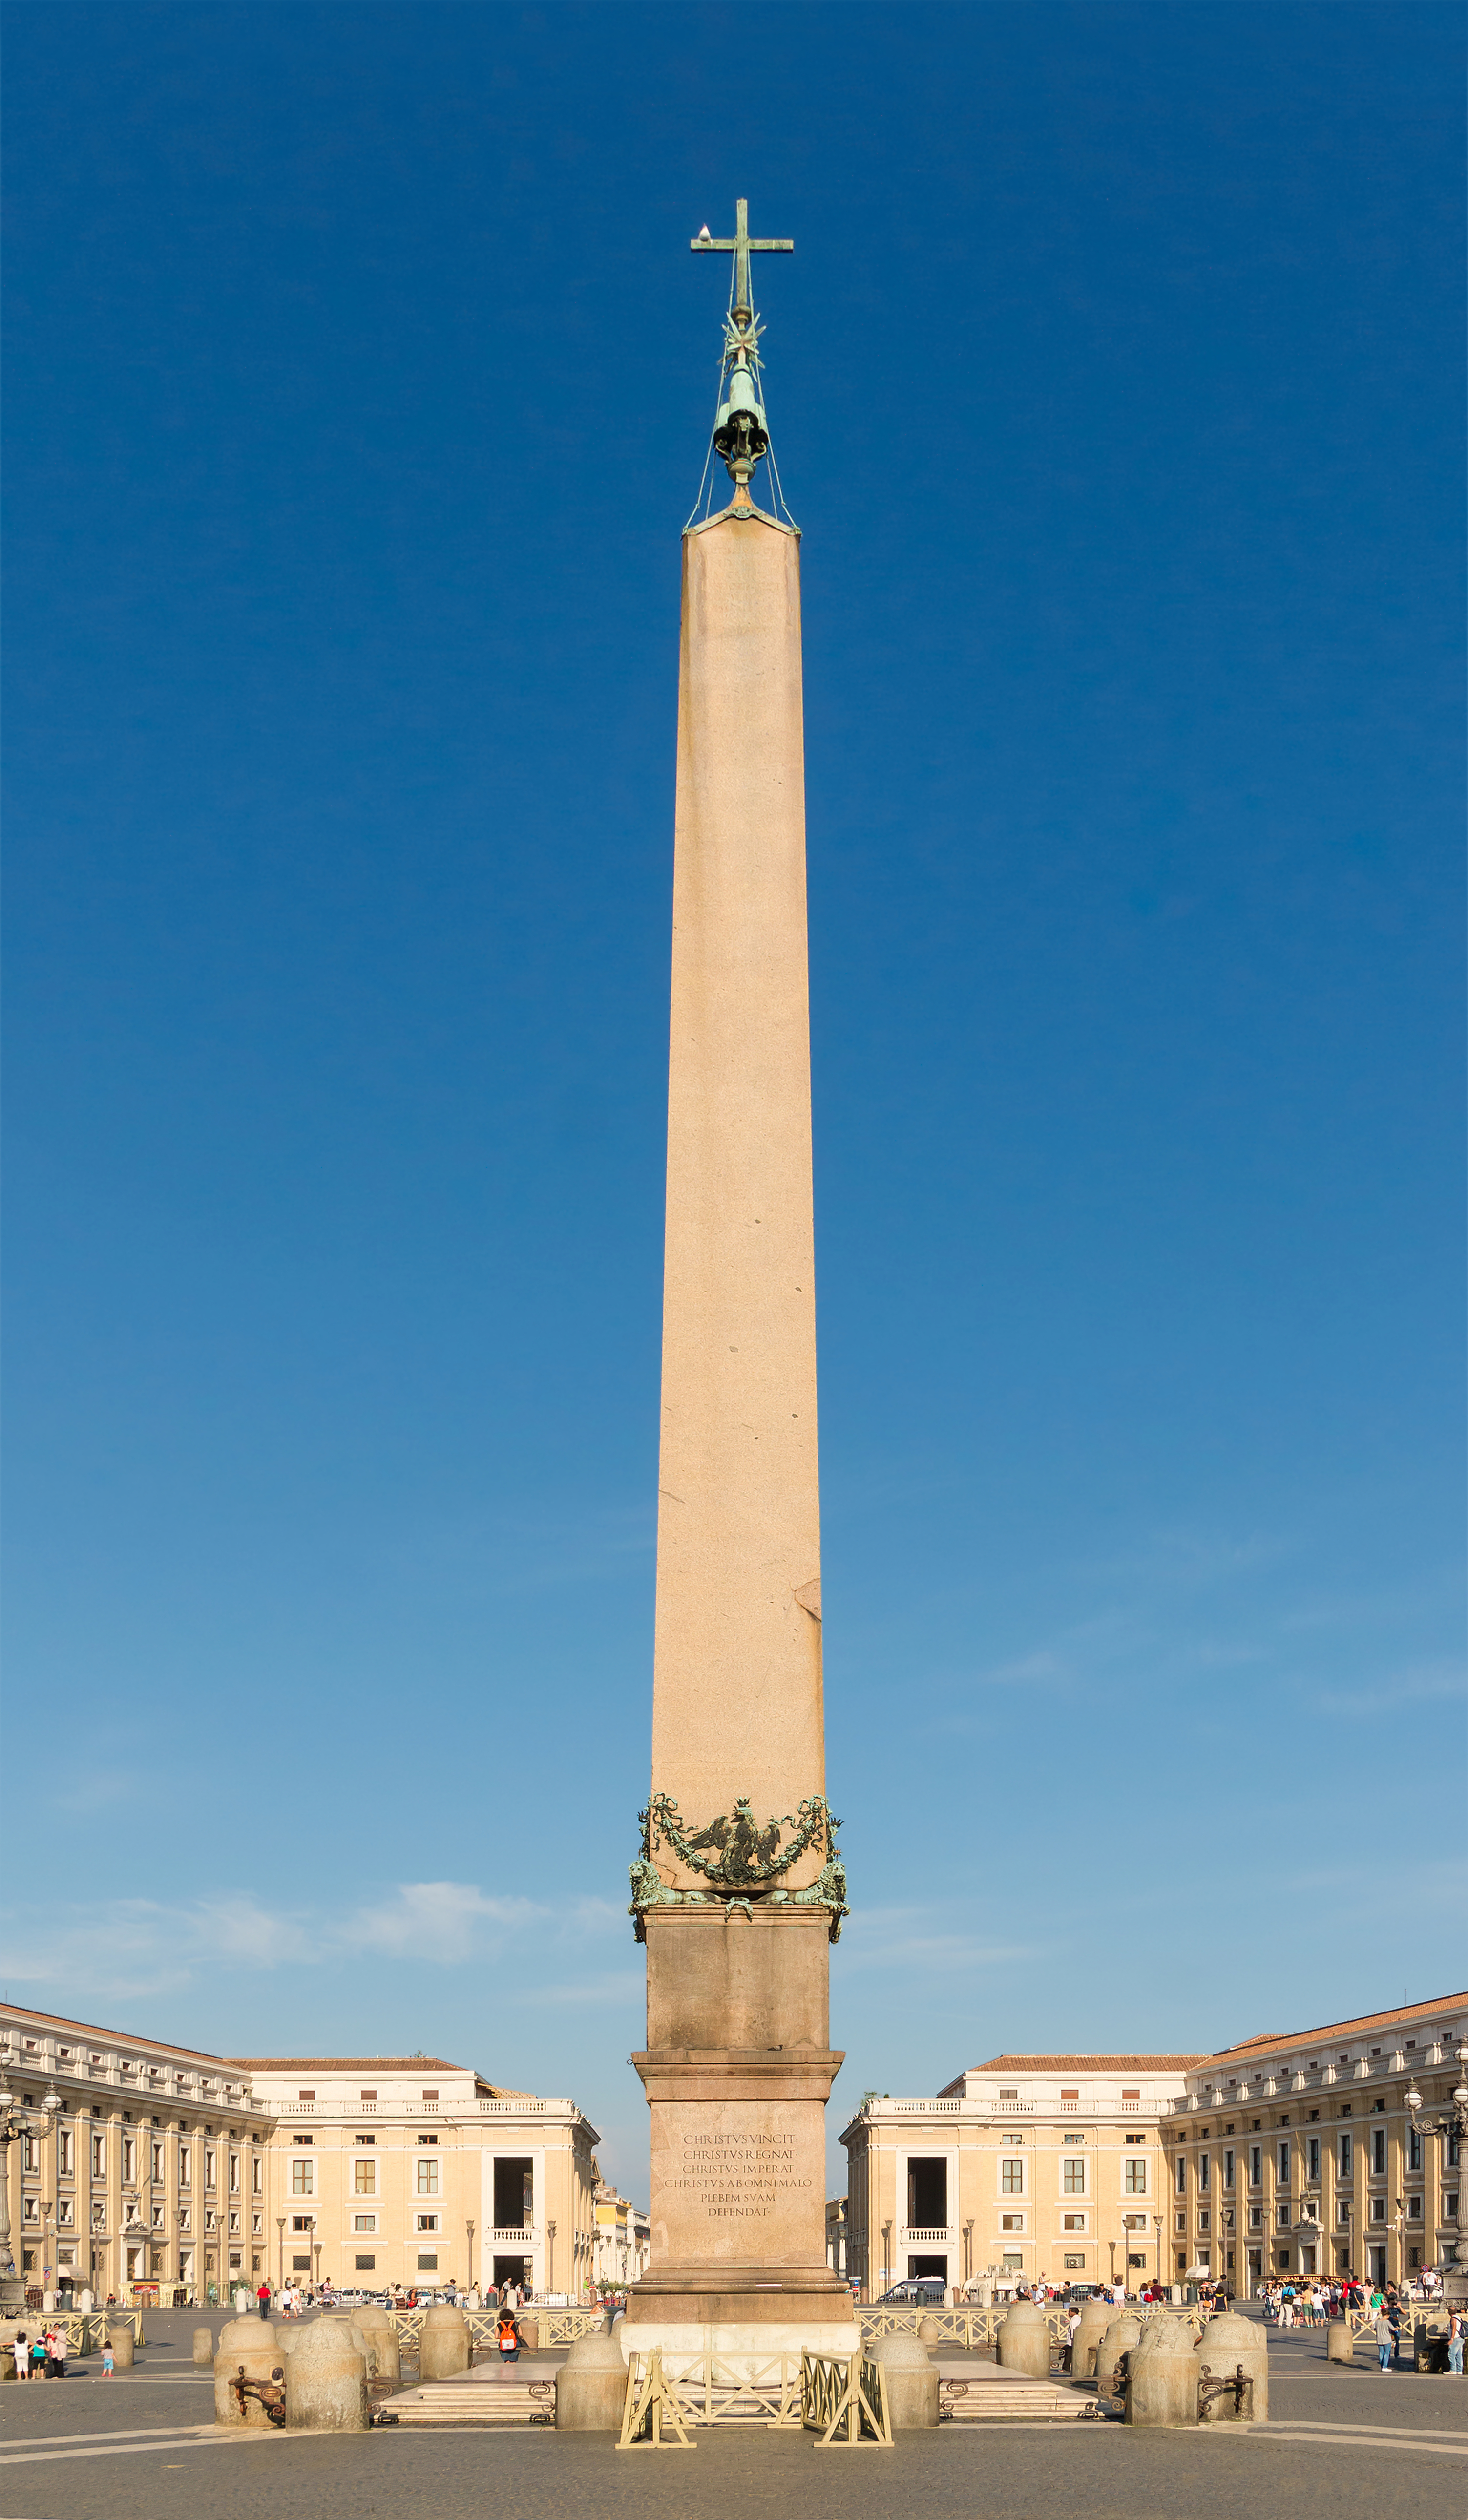 The Vatican obelisk was originally taken from Egypt by Caligula. Photo taken on August 23, 2013.